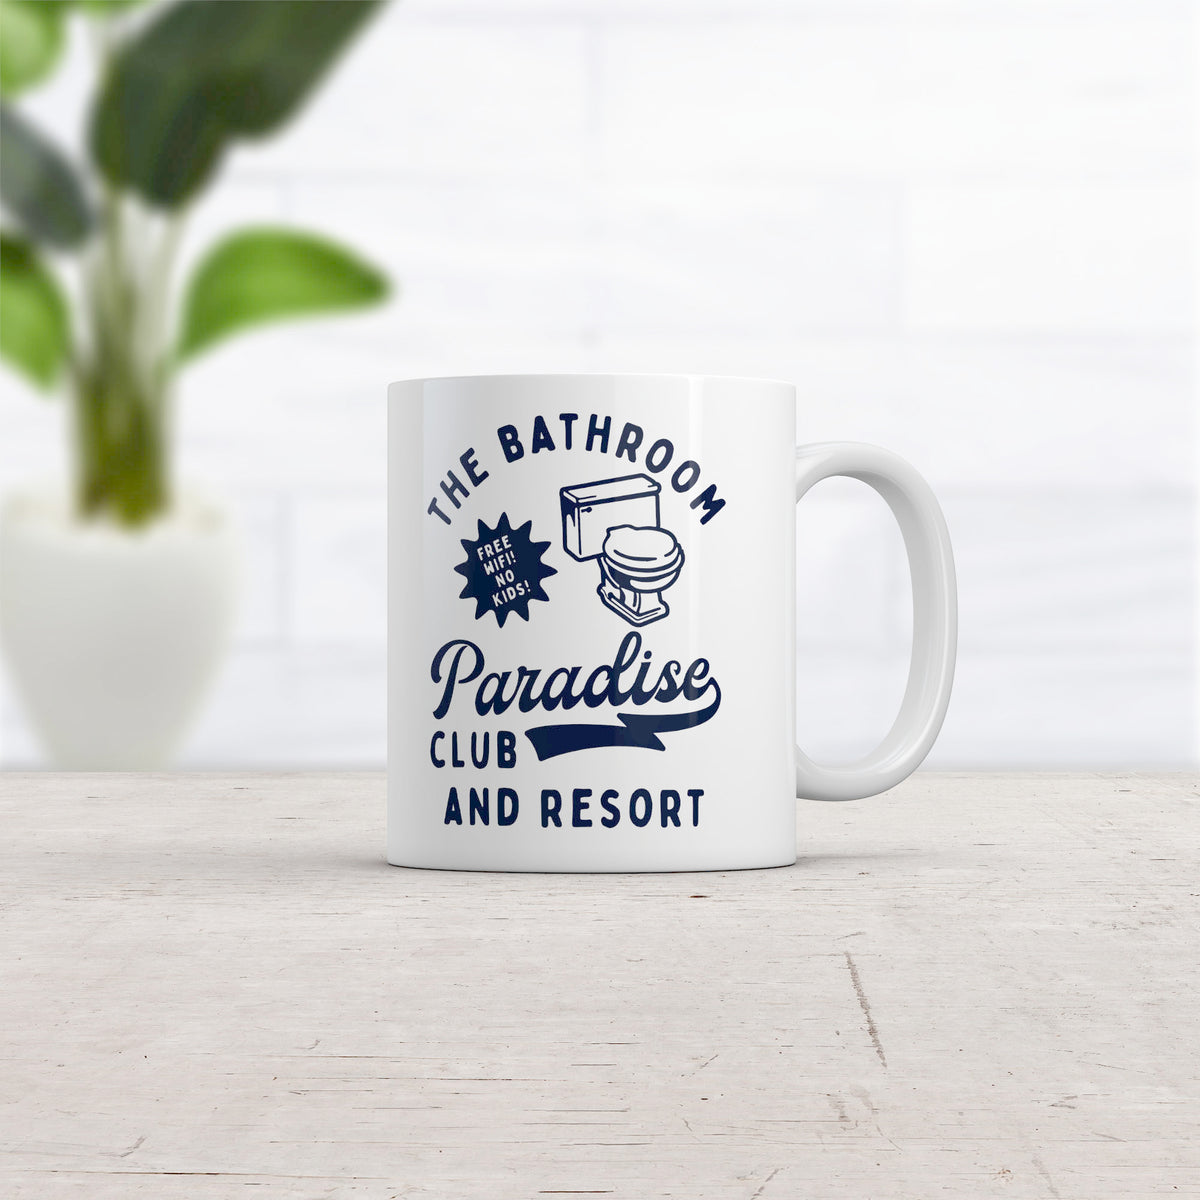 The Bathroom Paradise Club And Resort Mug